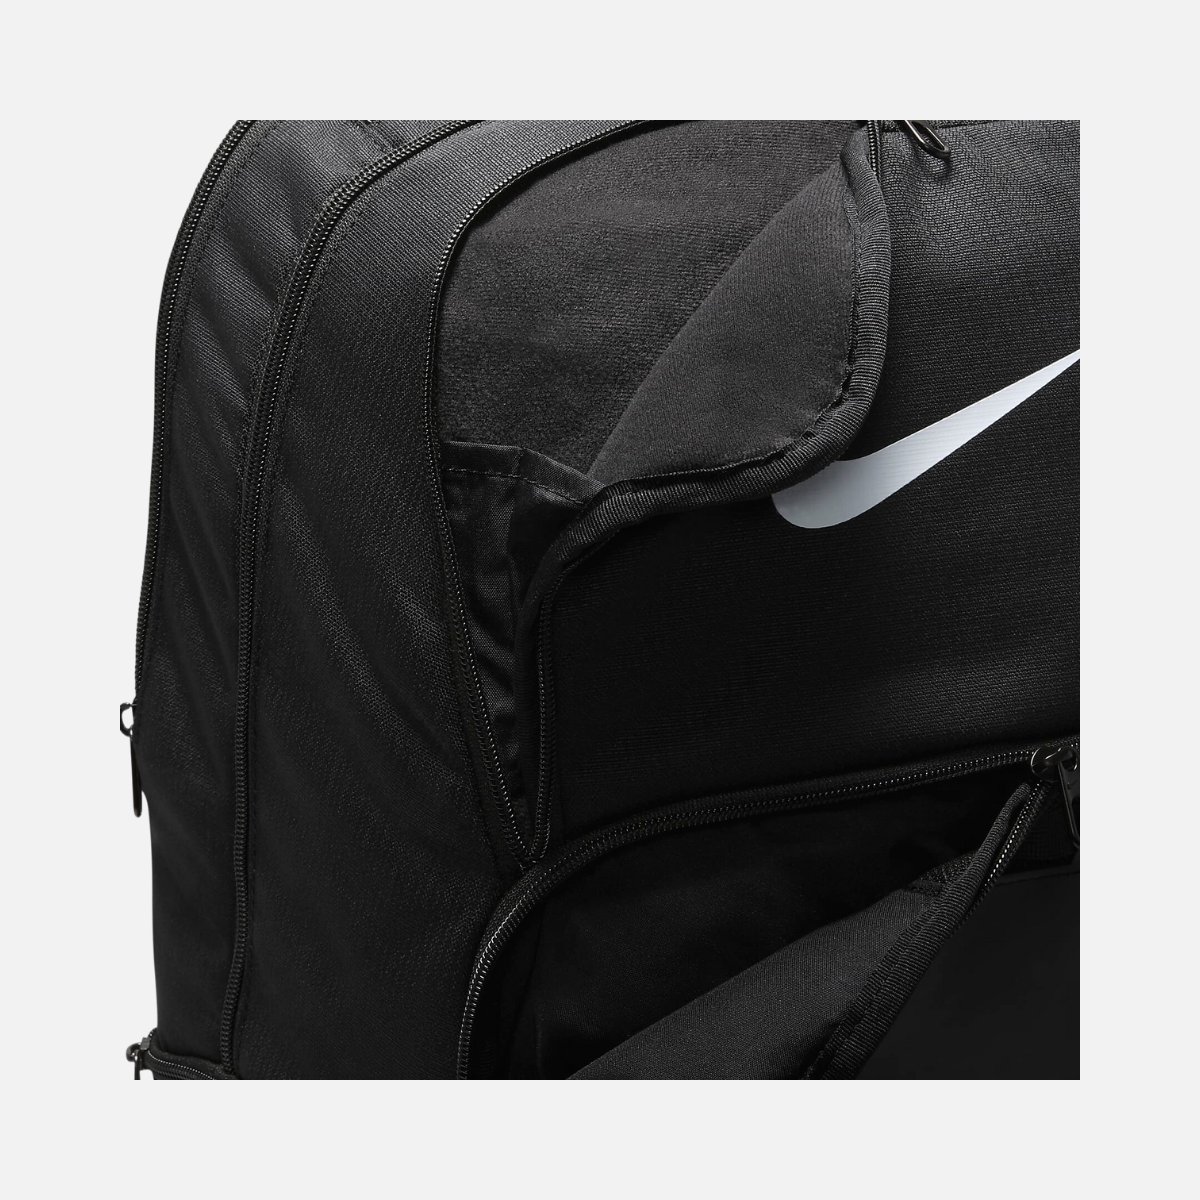 Training bag Nike Brasilia 9.5 L   - Football boots & equipment